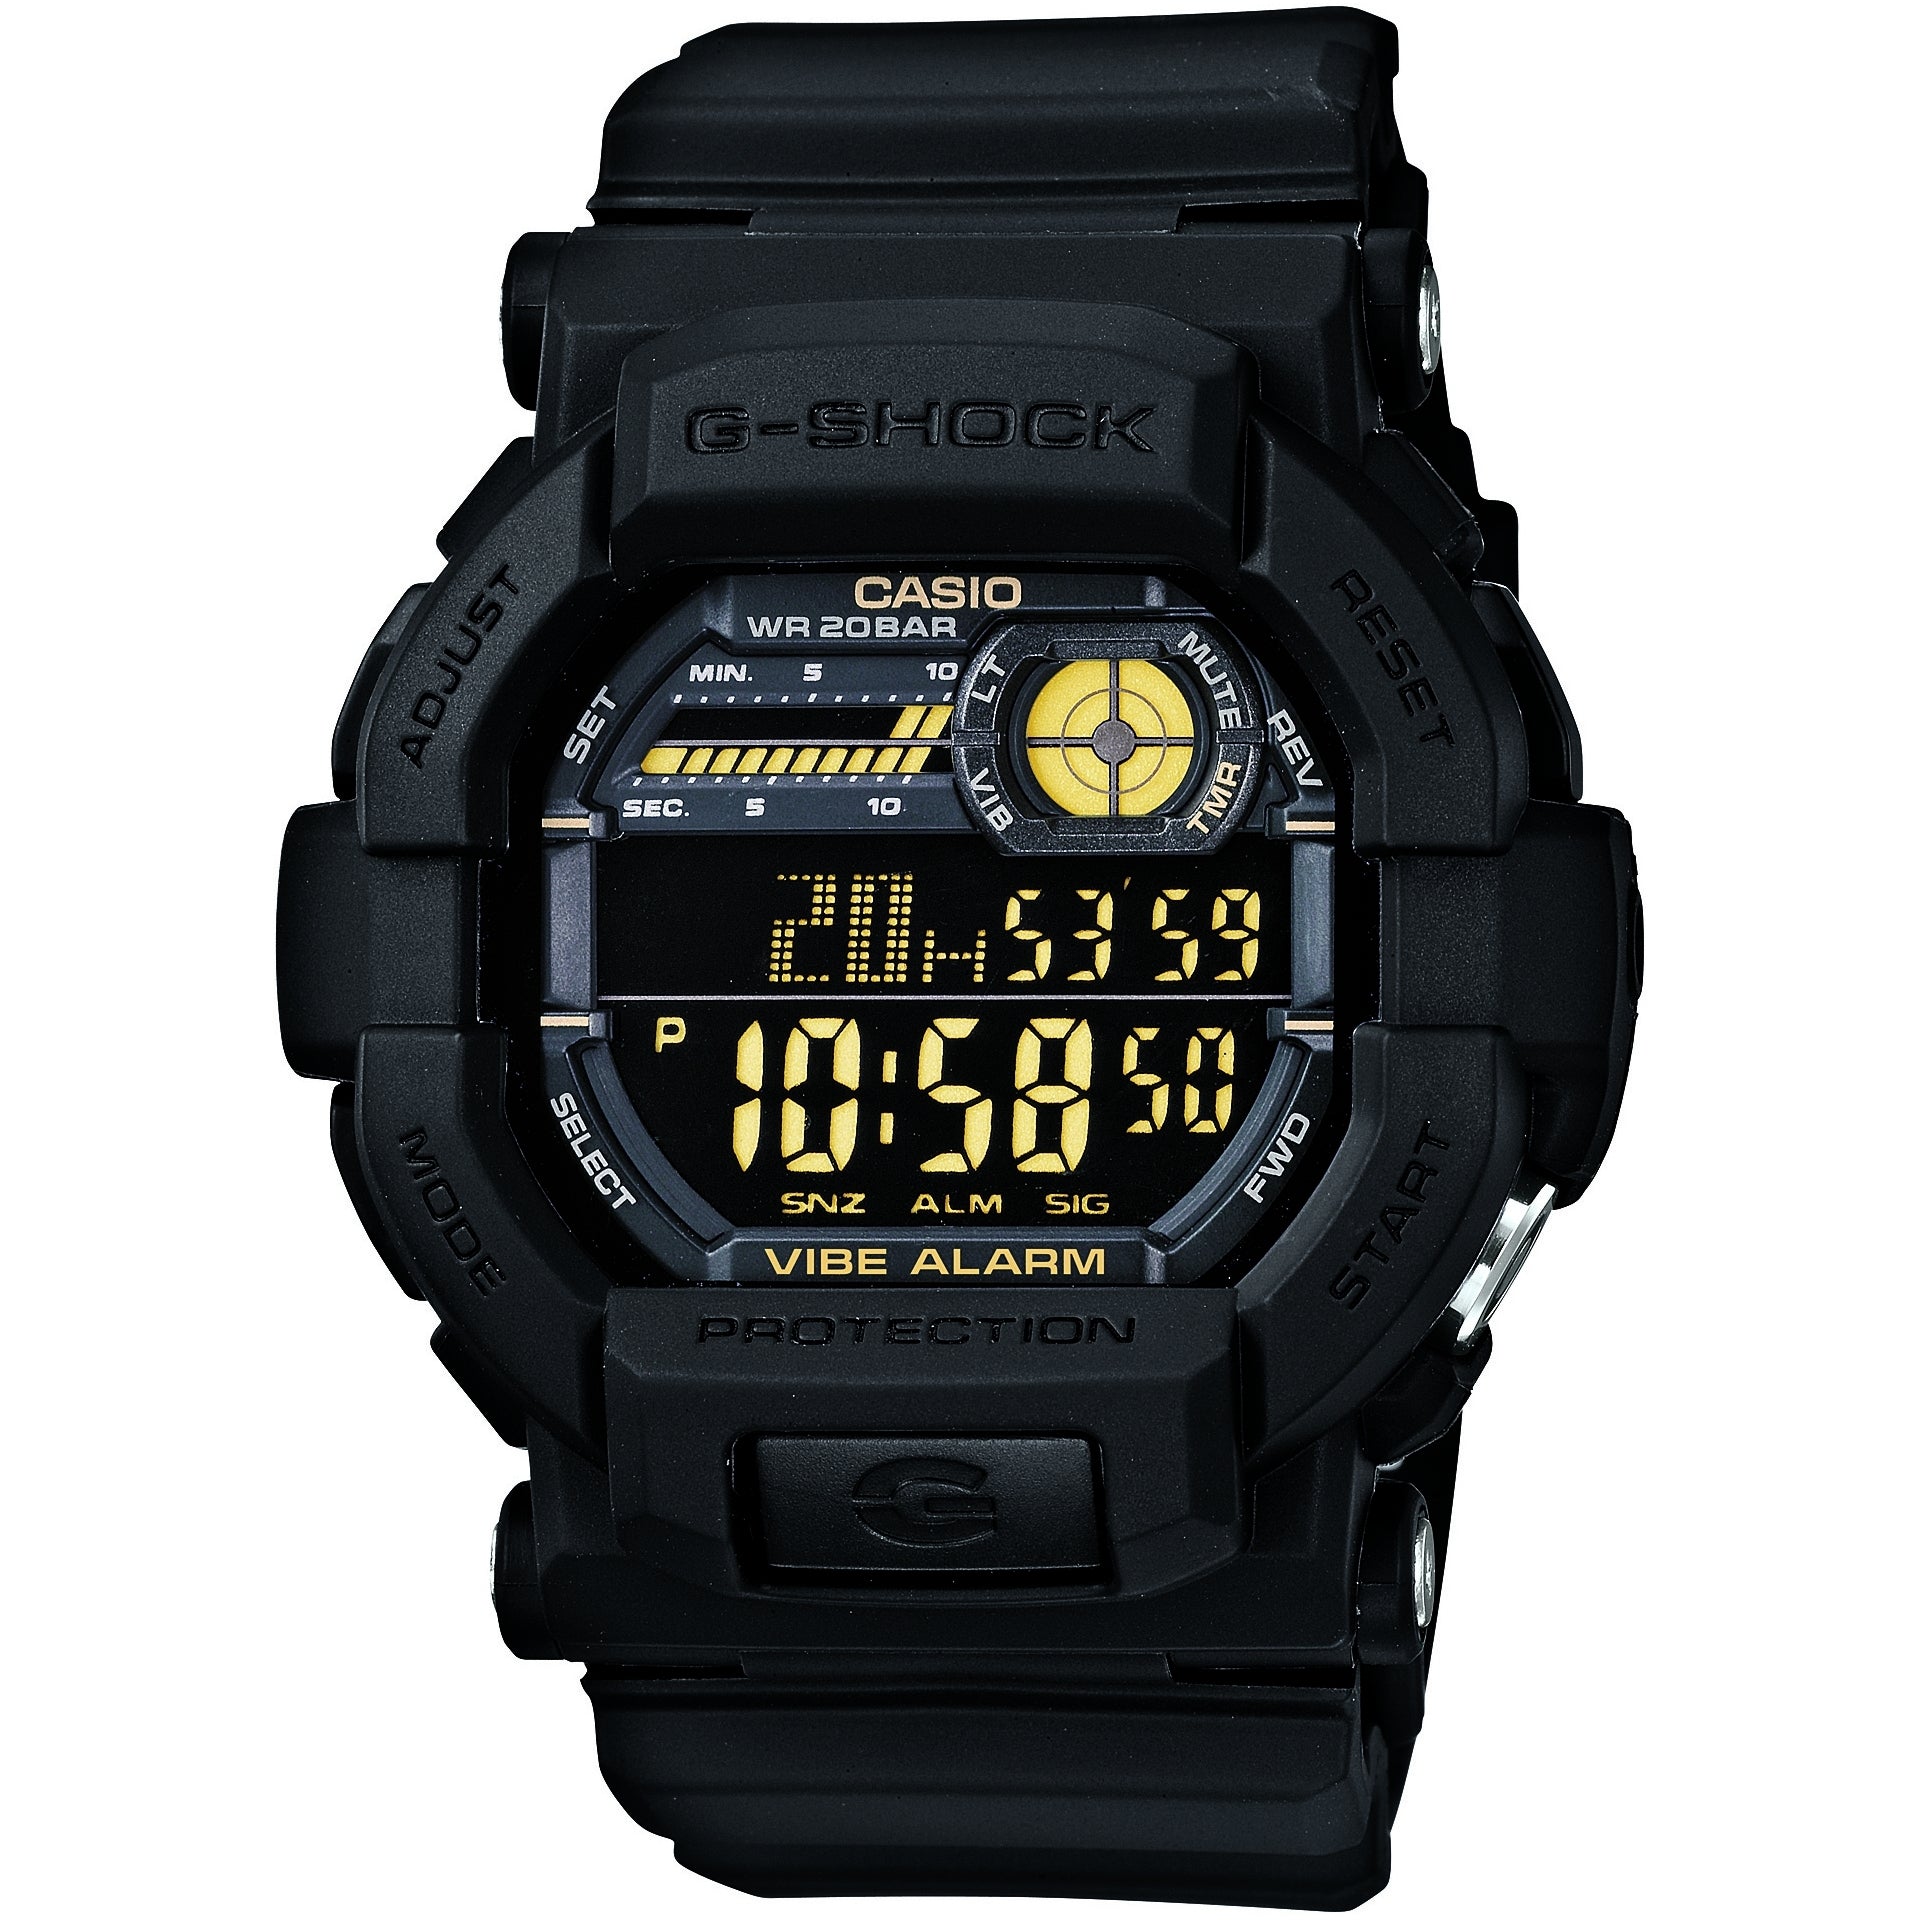 Casio G-Shock GD-350-1BER Vibrating 5 Alarm Black Yellow Men's Watch - mzwatcheslk srilanka